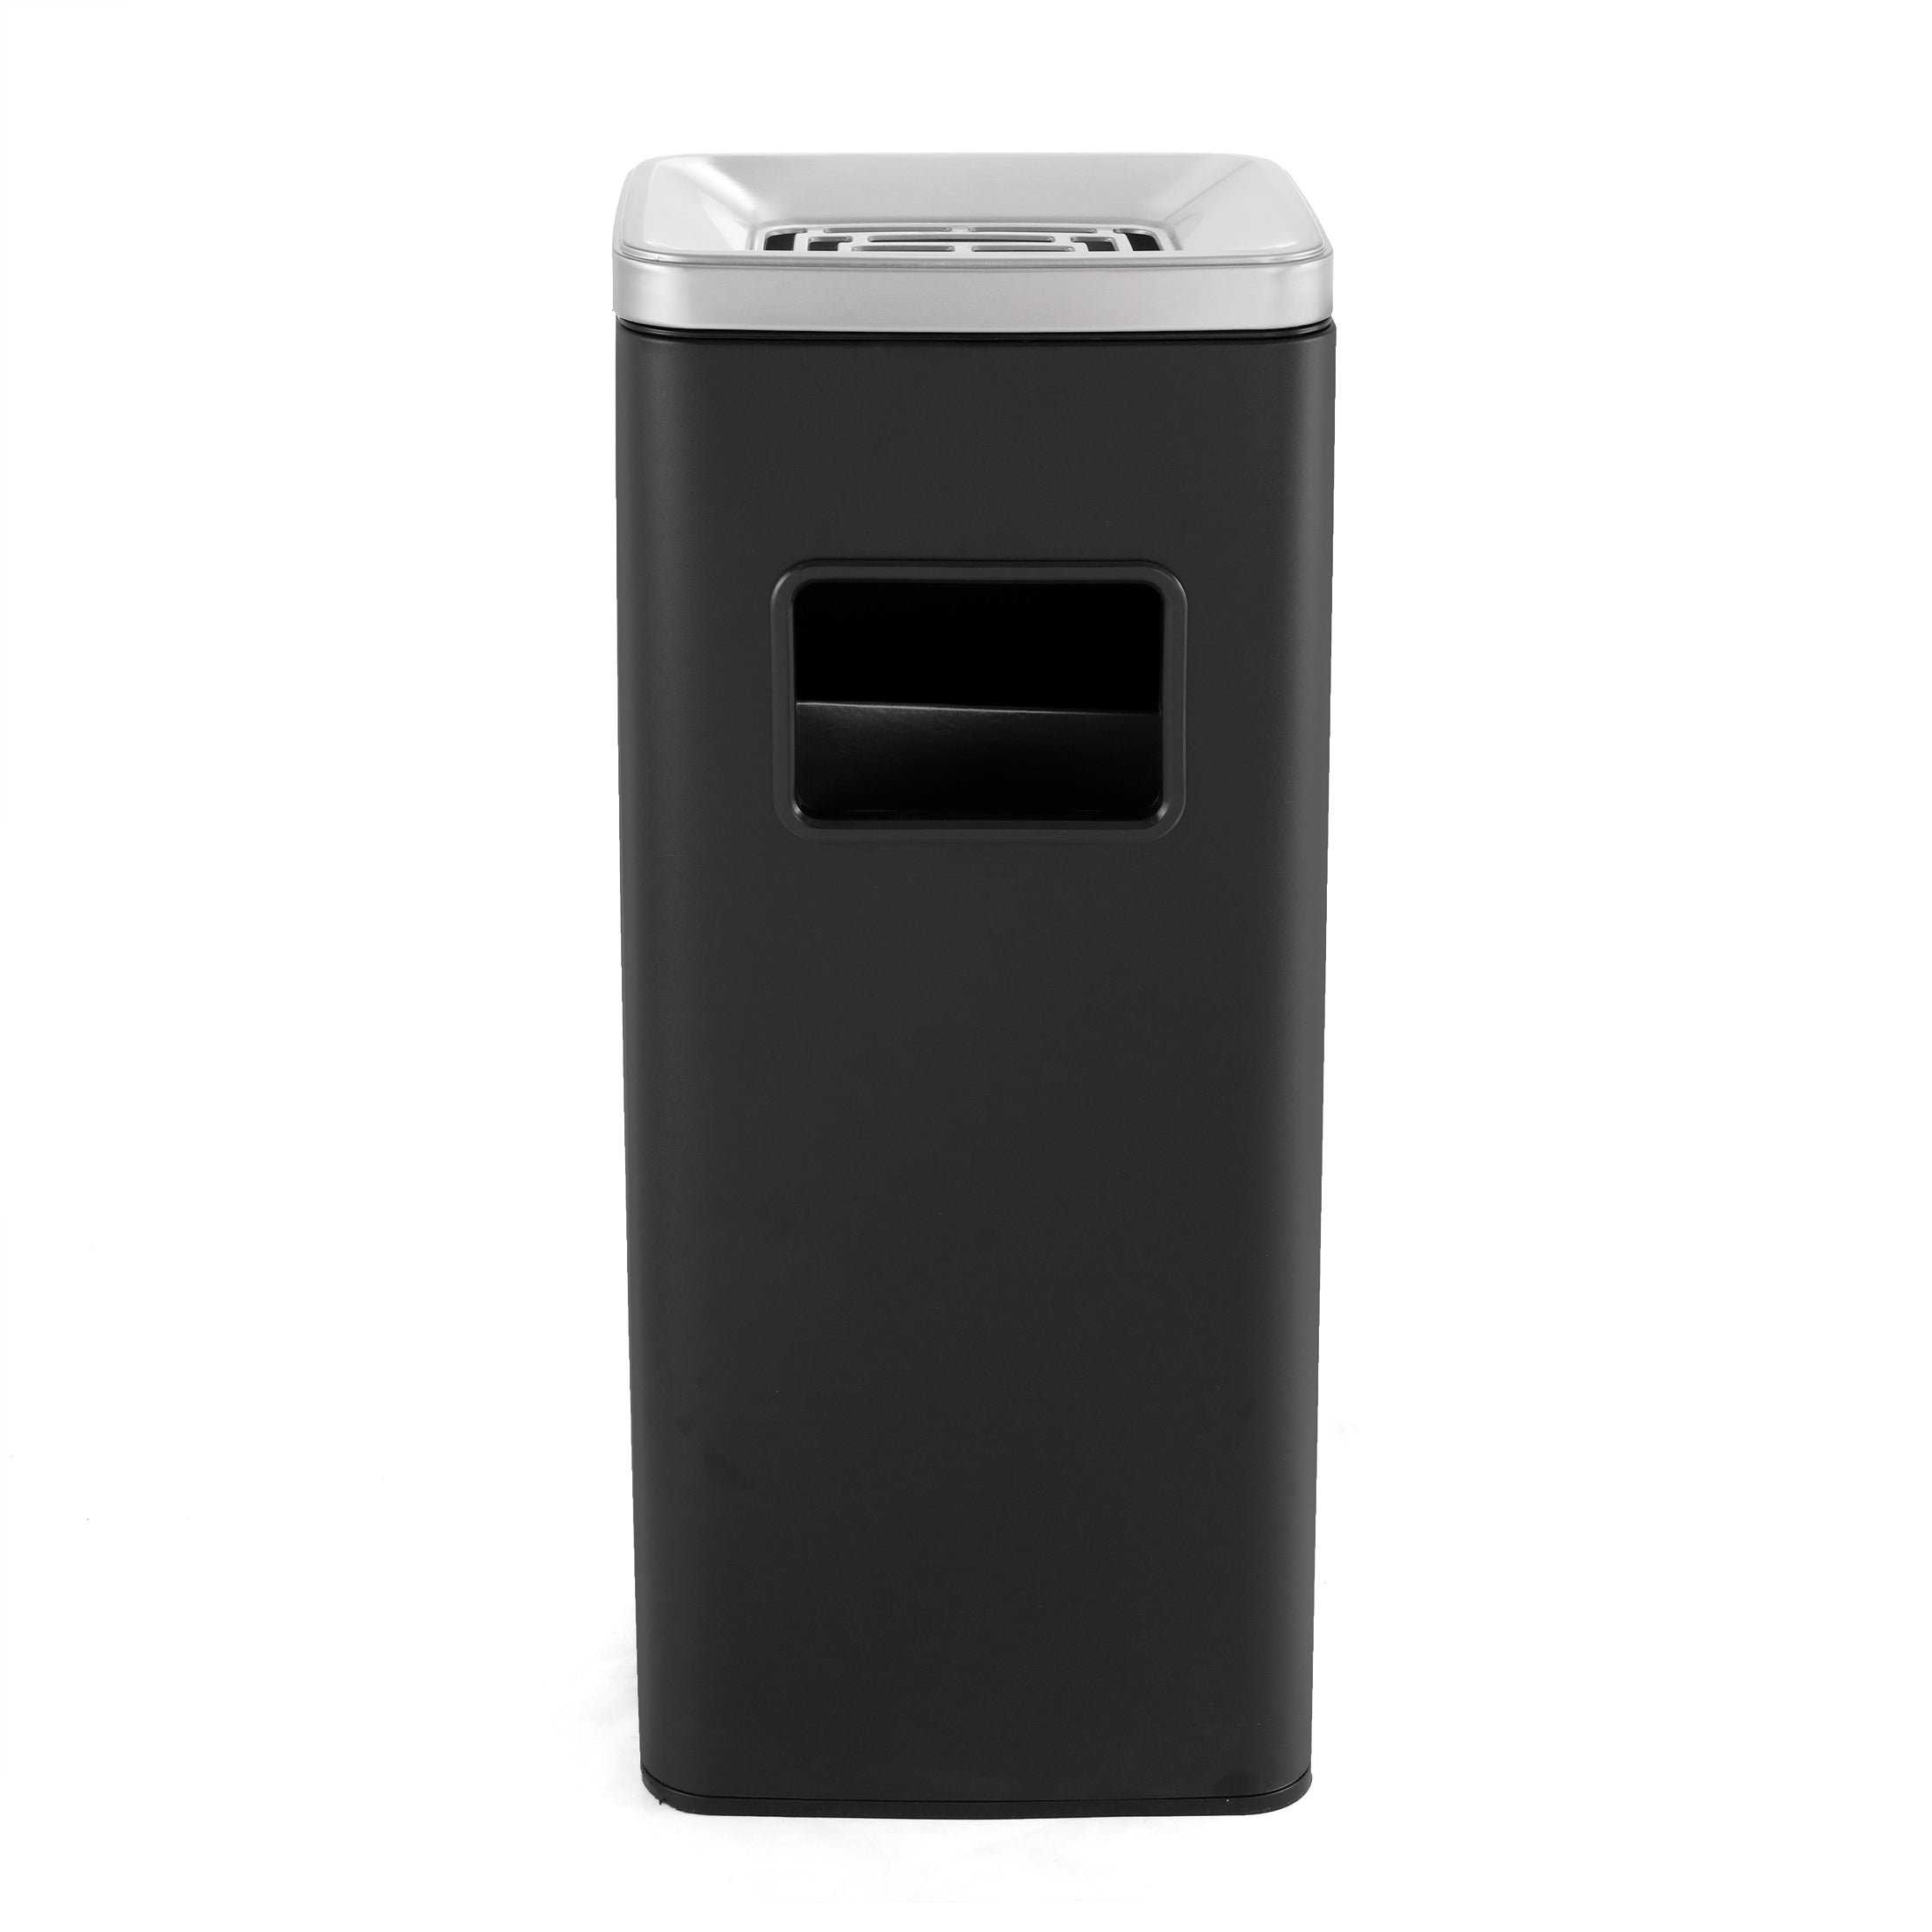 Beamnova Black stainless steel trash can